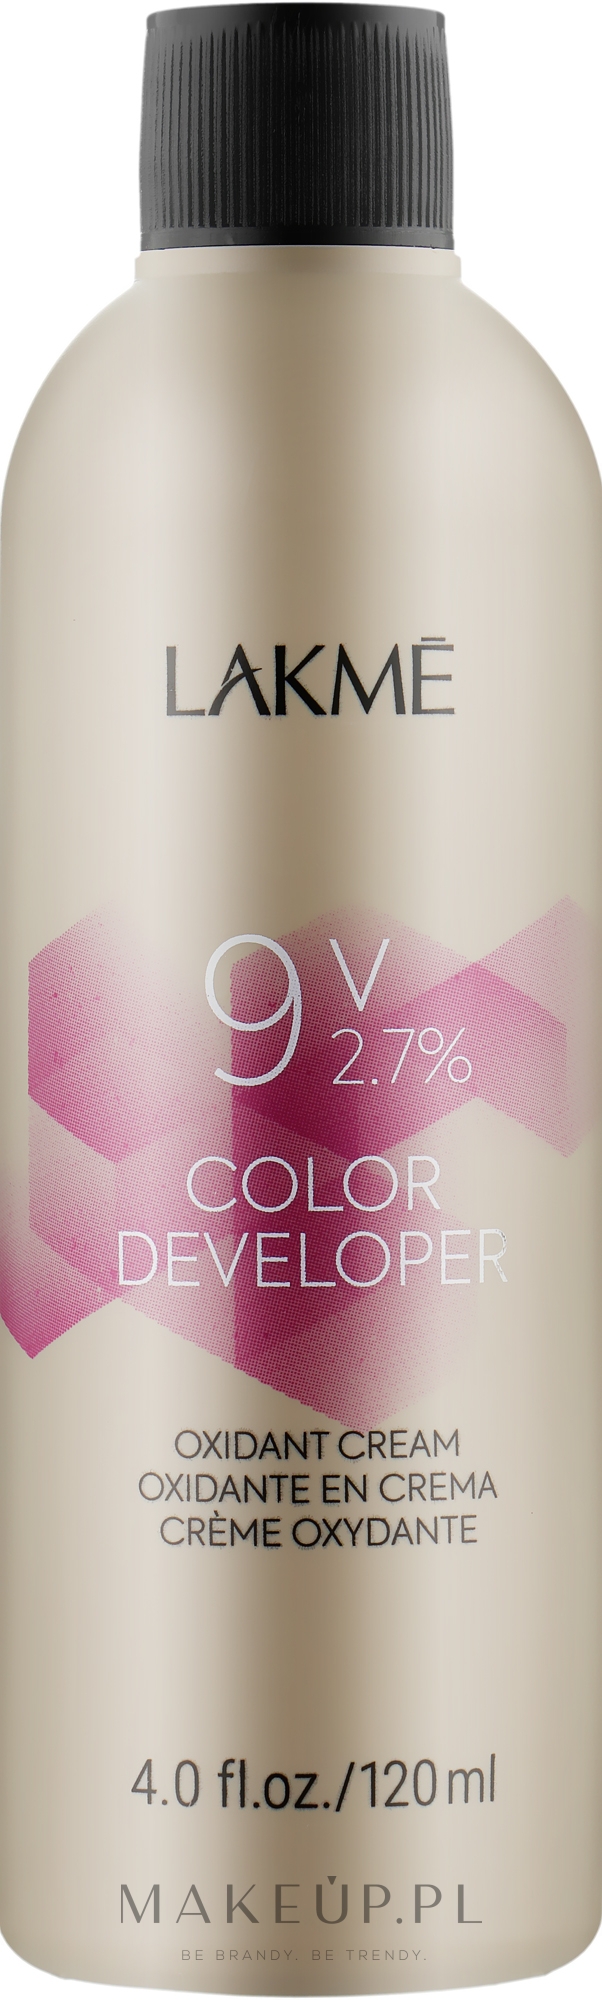 Krem utleniający - Lakme Color Developer 9V (2,7%) — Zdjęcie 120 ml